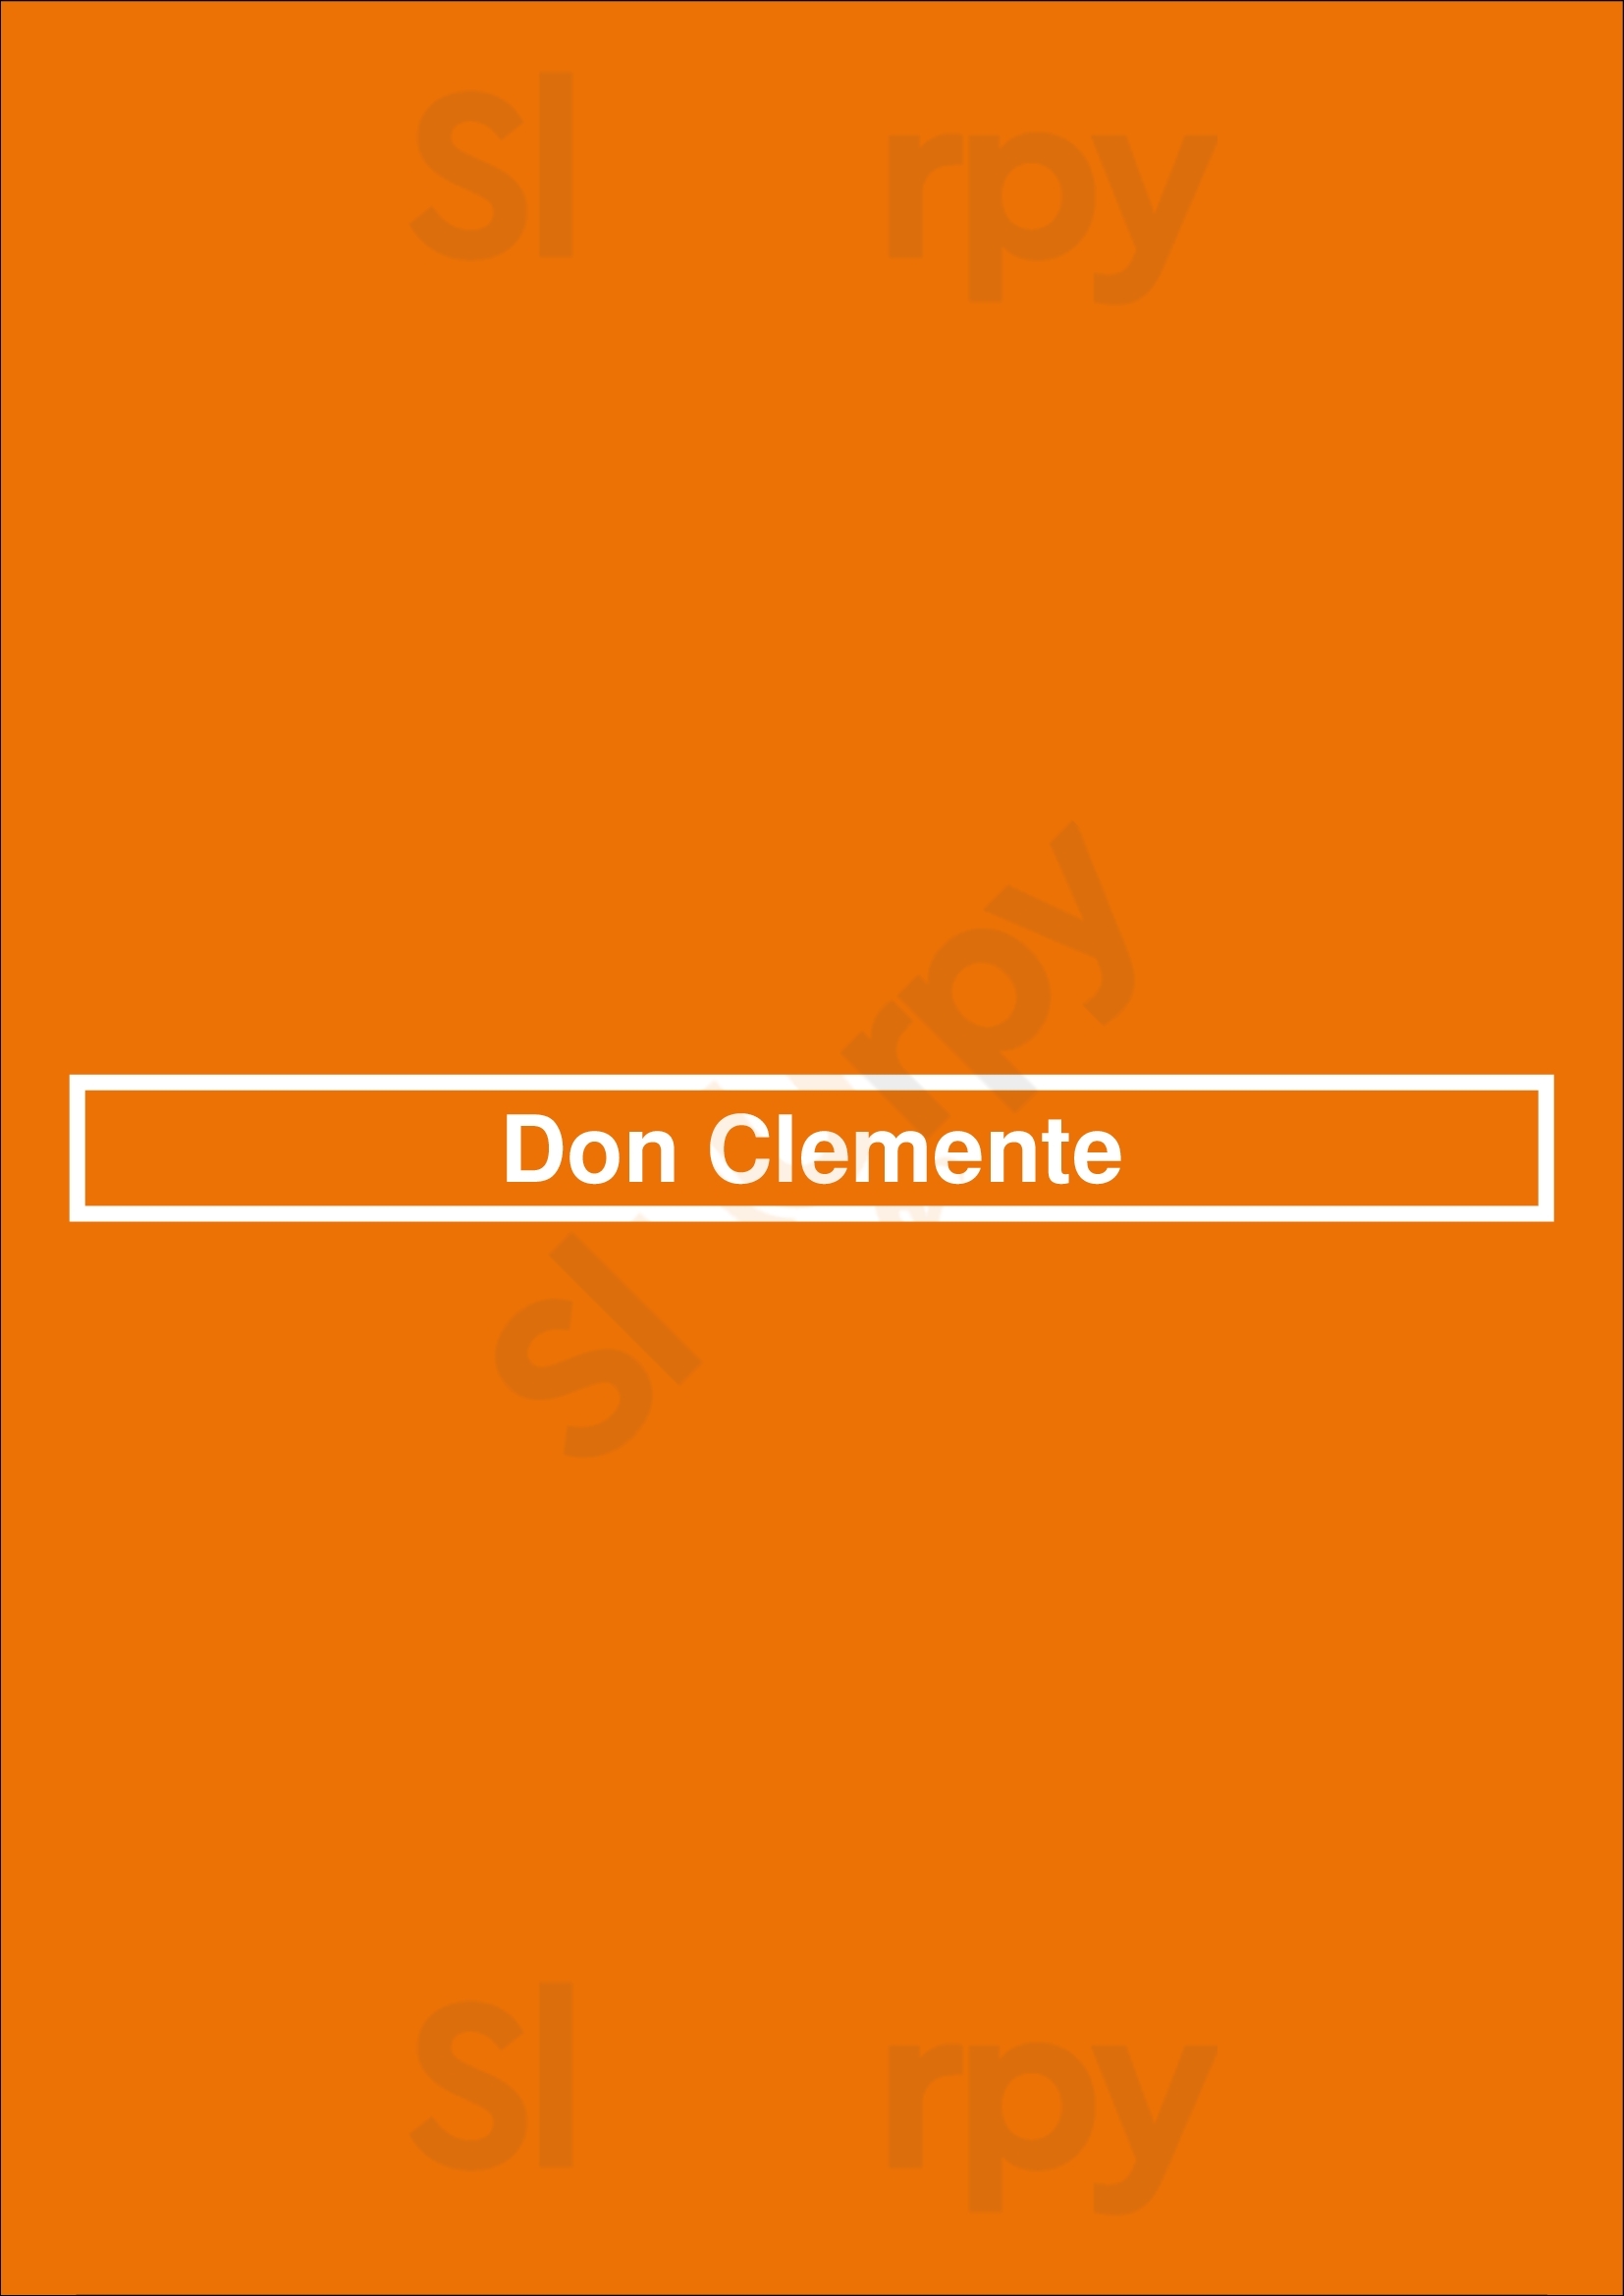 Don Clemente La Plata Menu - 1